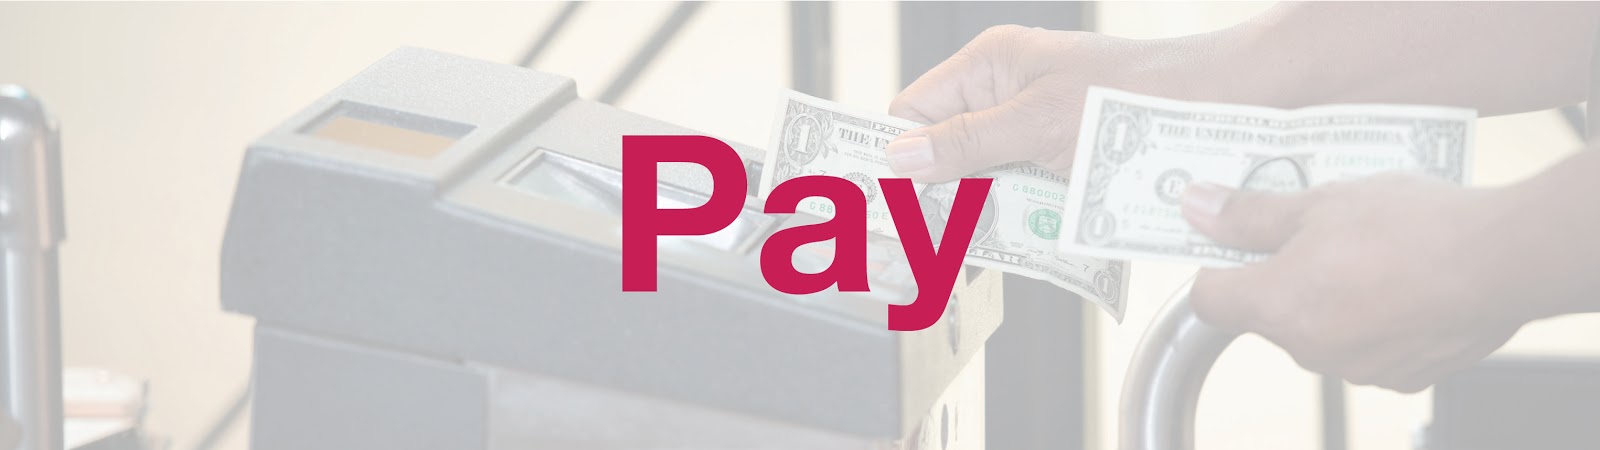 Pay (Image: Farebox)